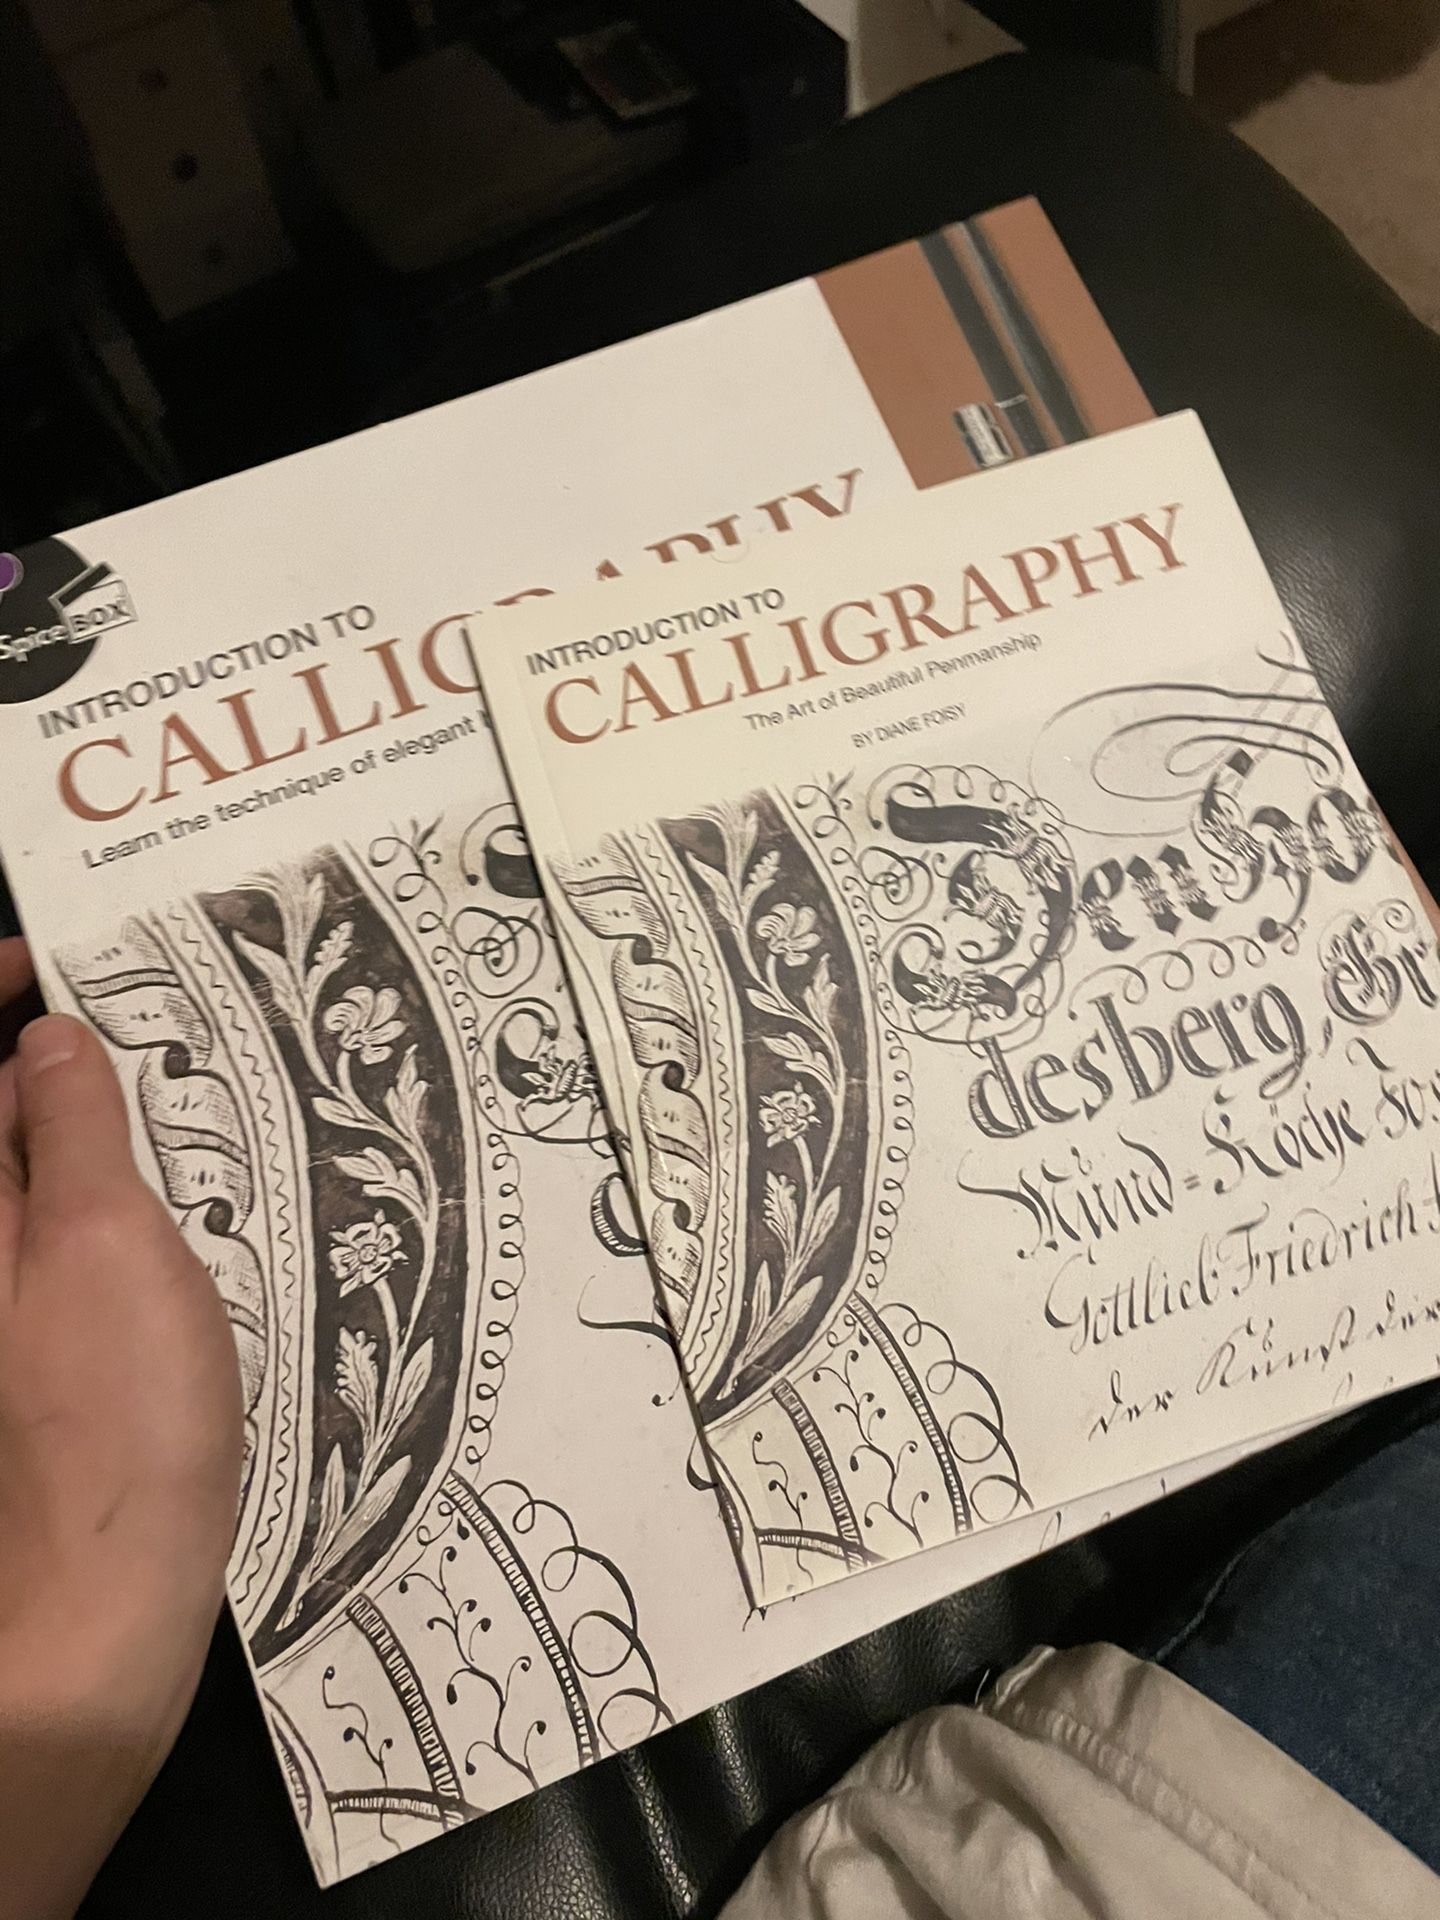 Calligraphy Kits